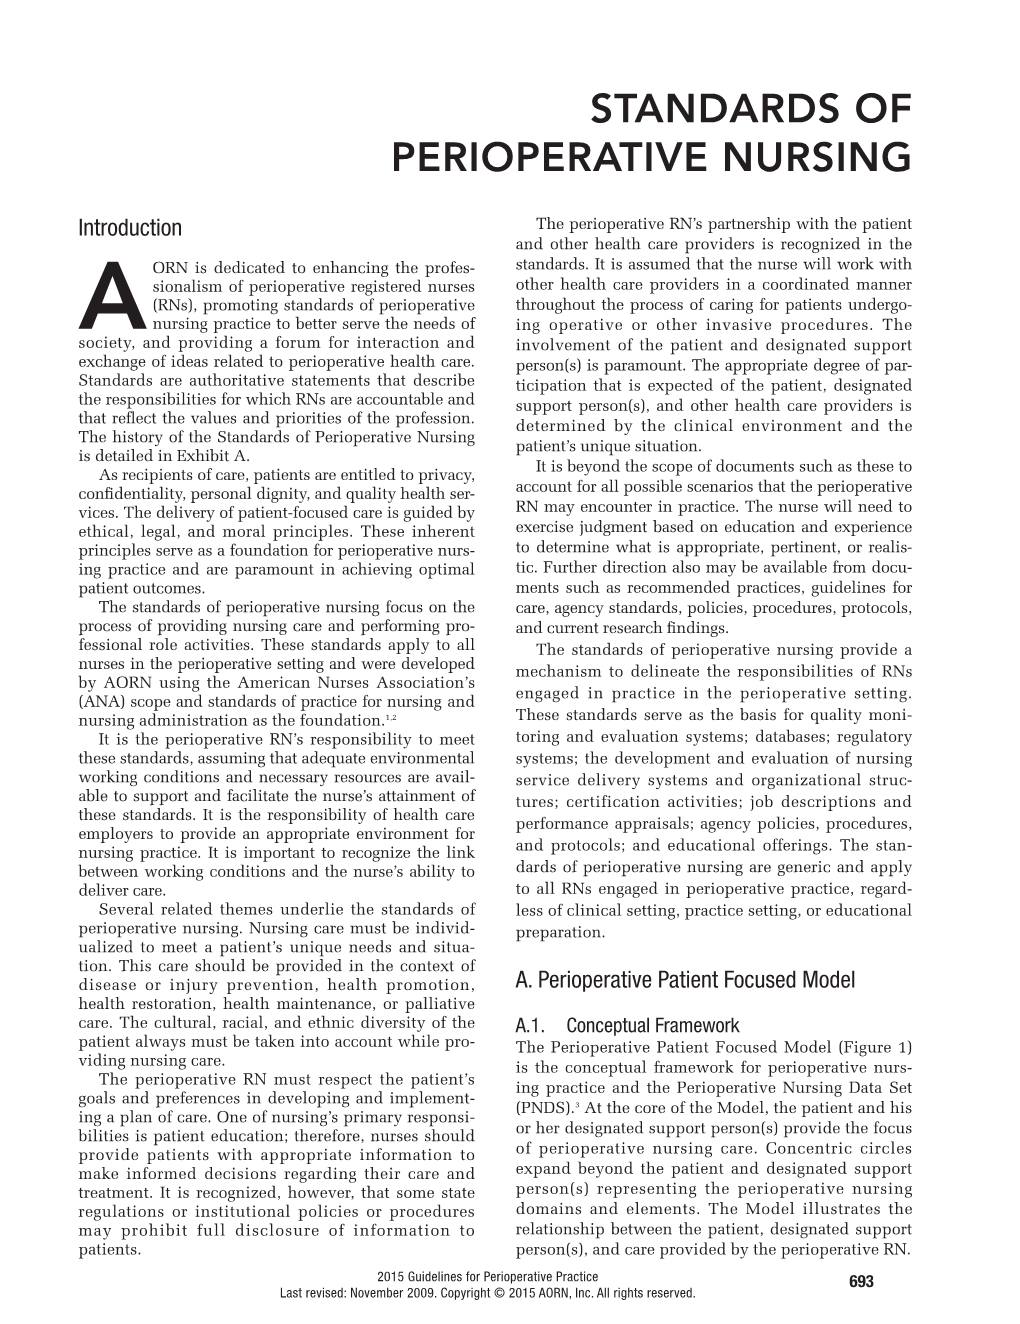 Standards of Perioperative Nursing